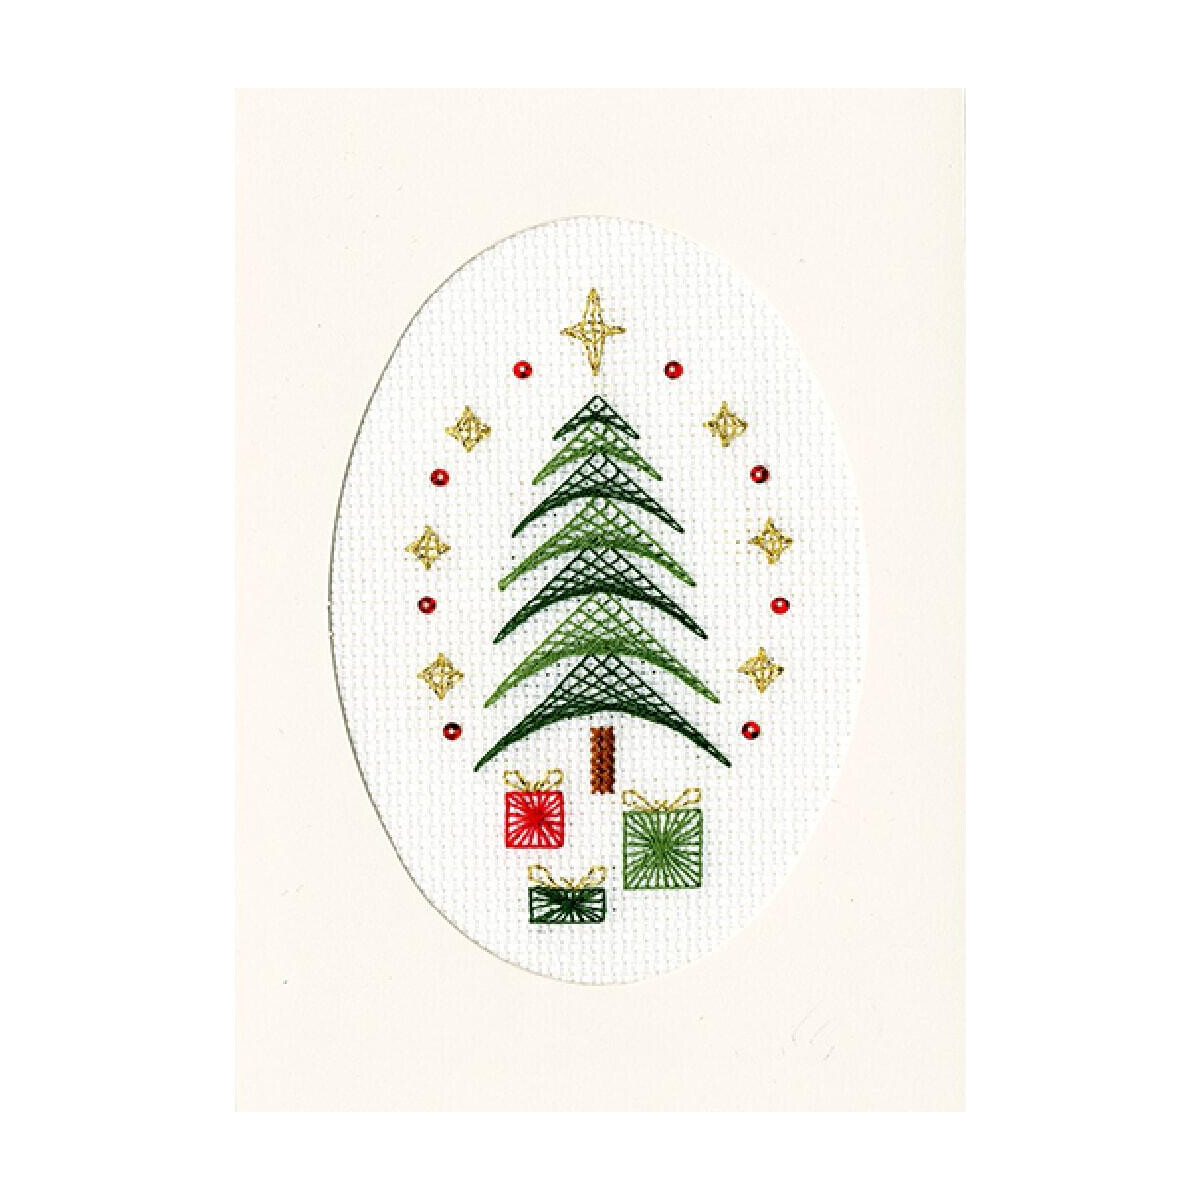 Tarjeta navideña bordada con un árbol de...